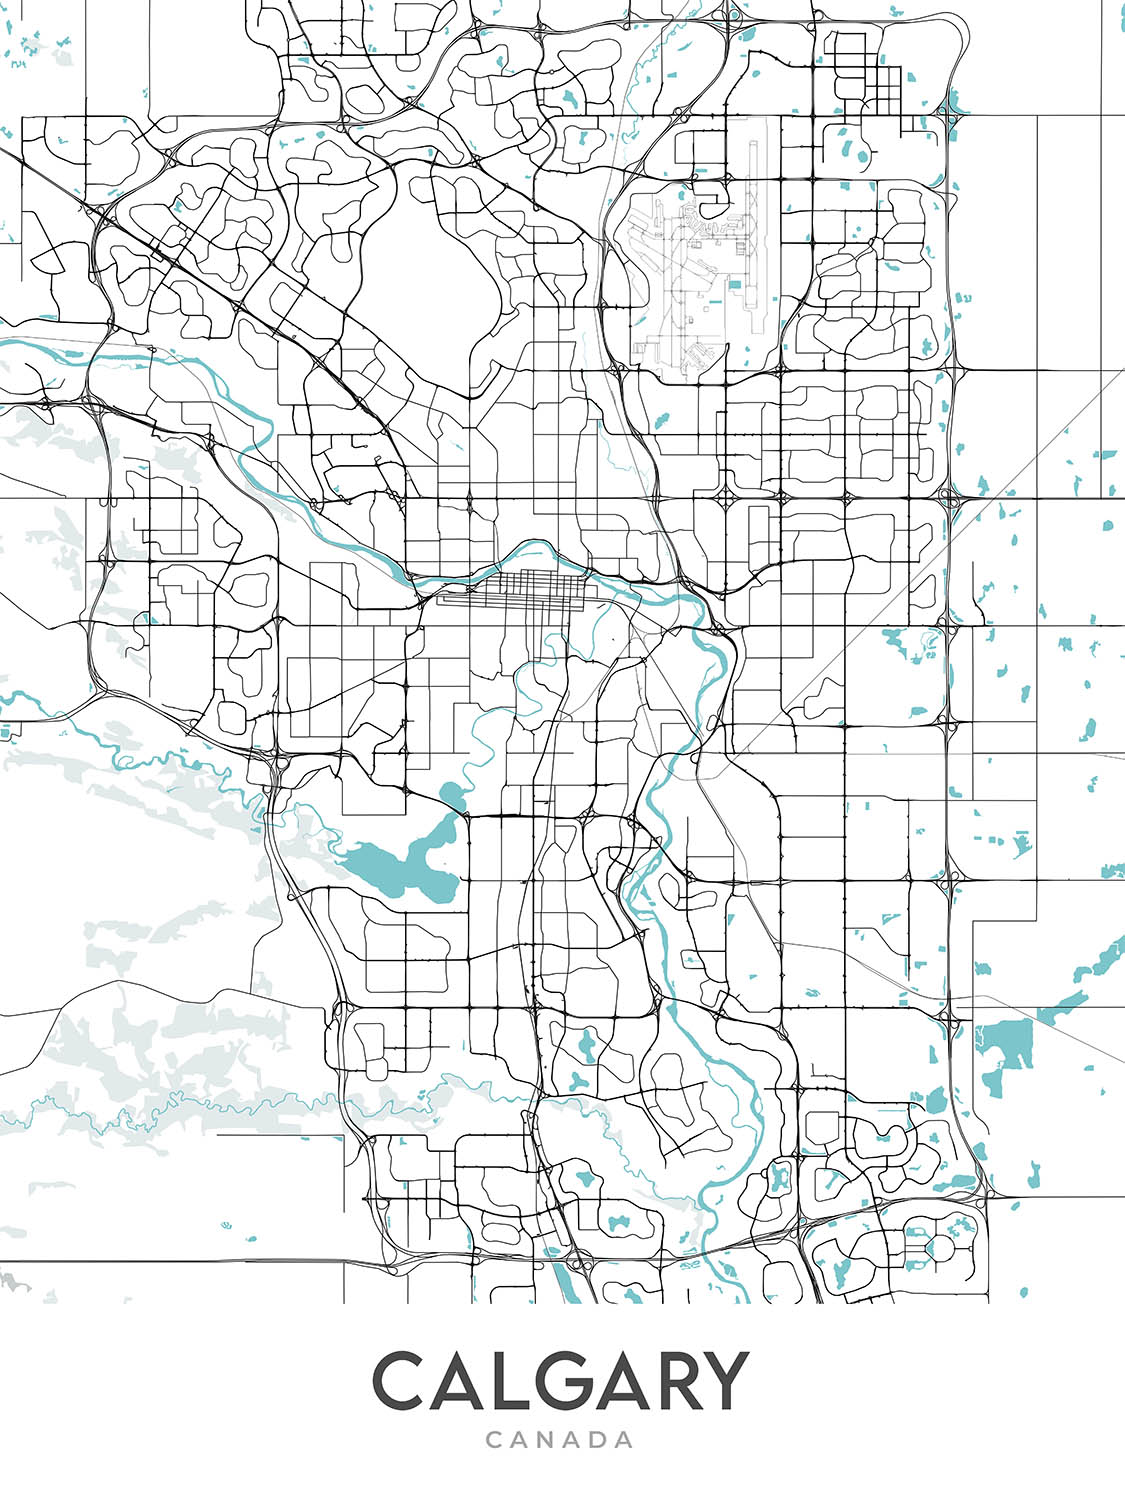 Moderner Stadtplan von Calgary, AB: Innenstadt, Calgary Tower, Prince's Island Park, Crowchild Trail, Glenmore Trail